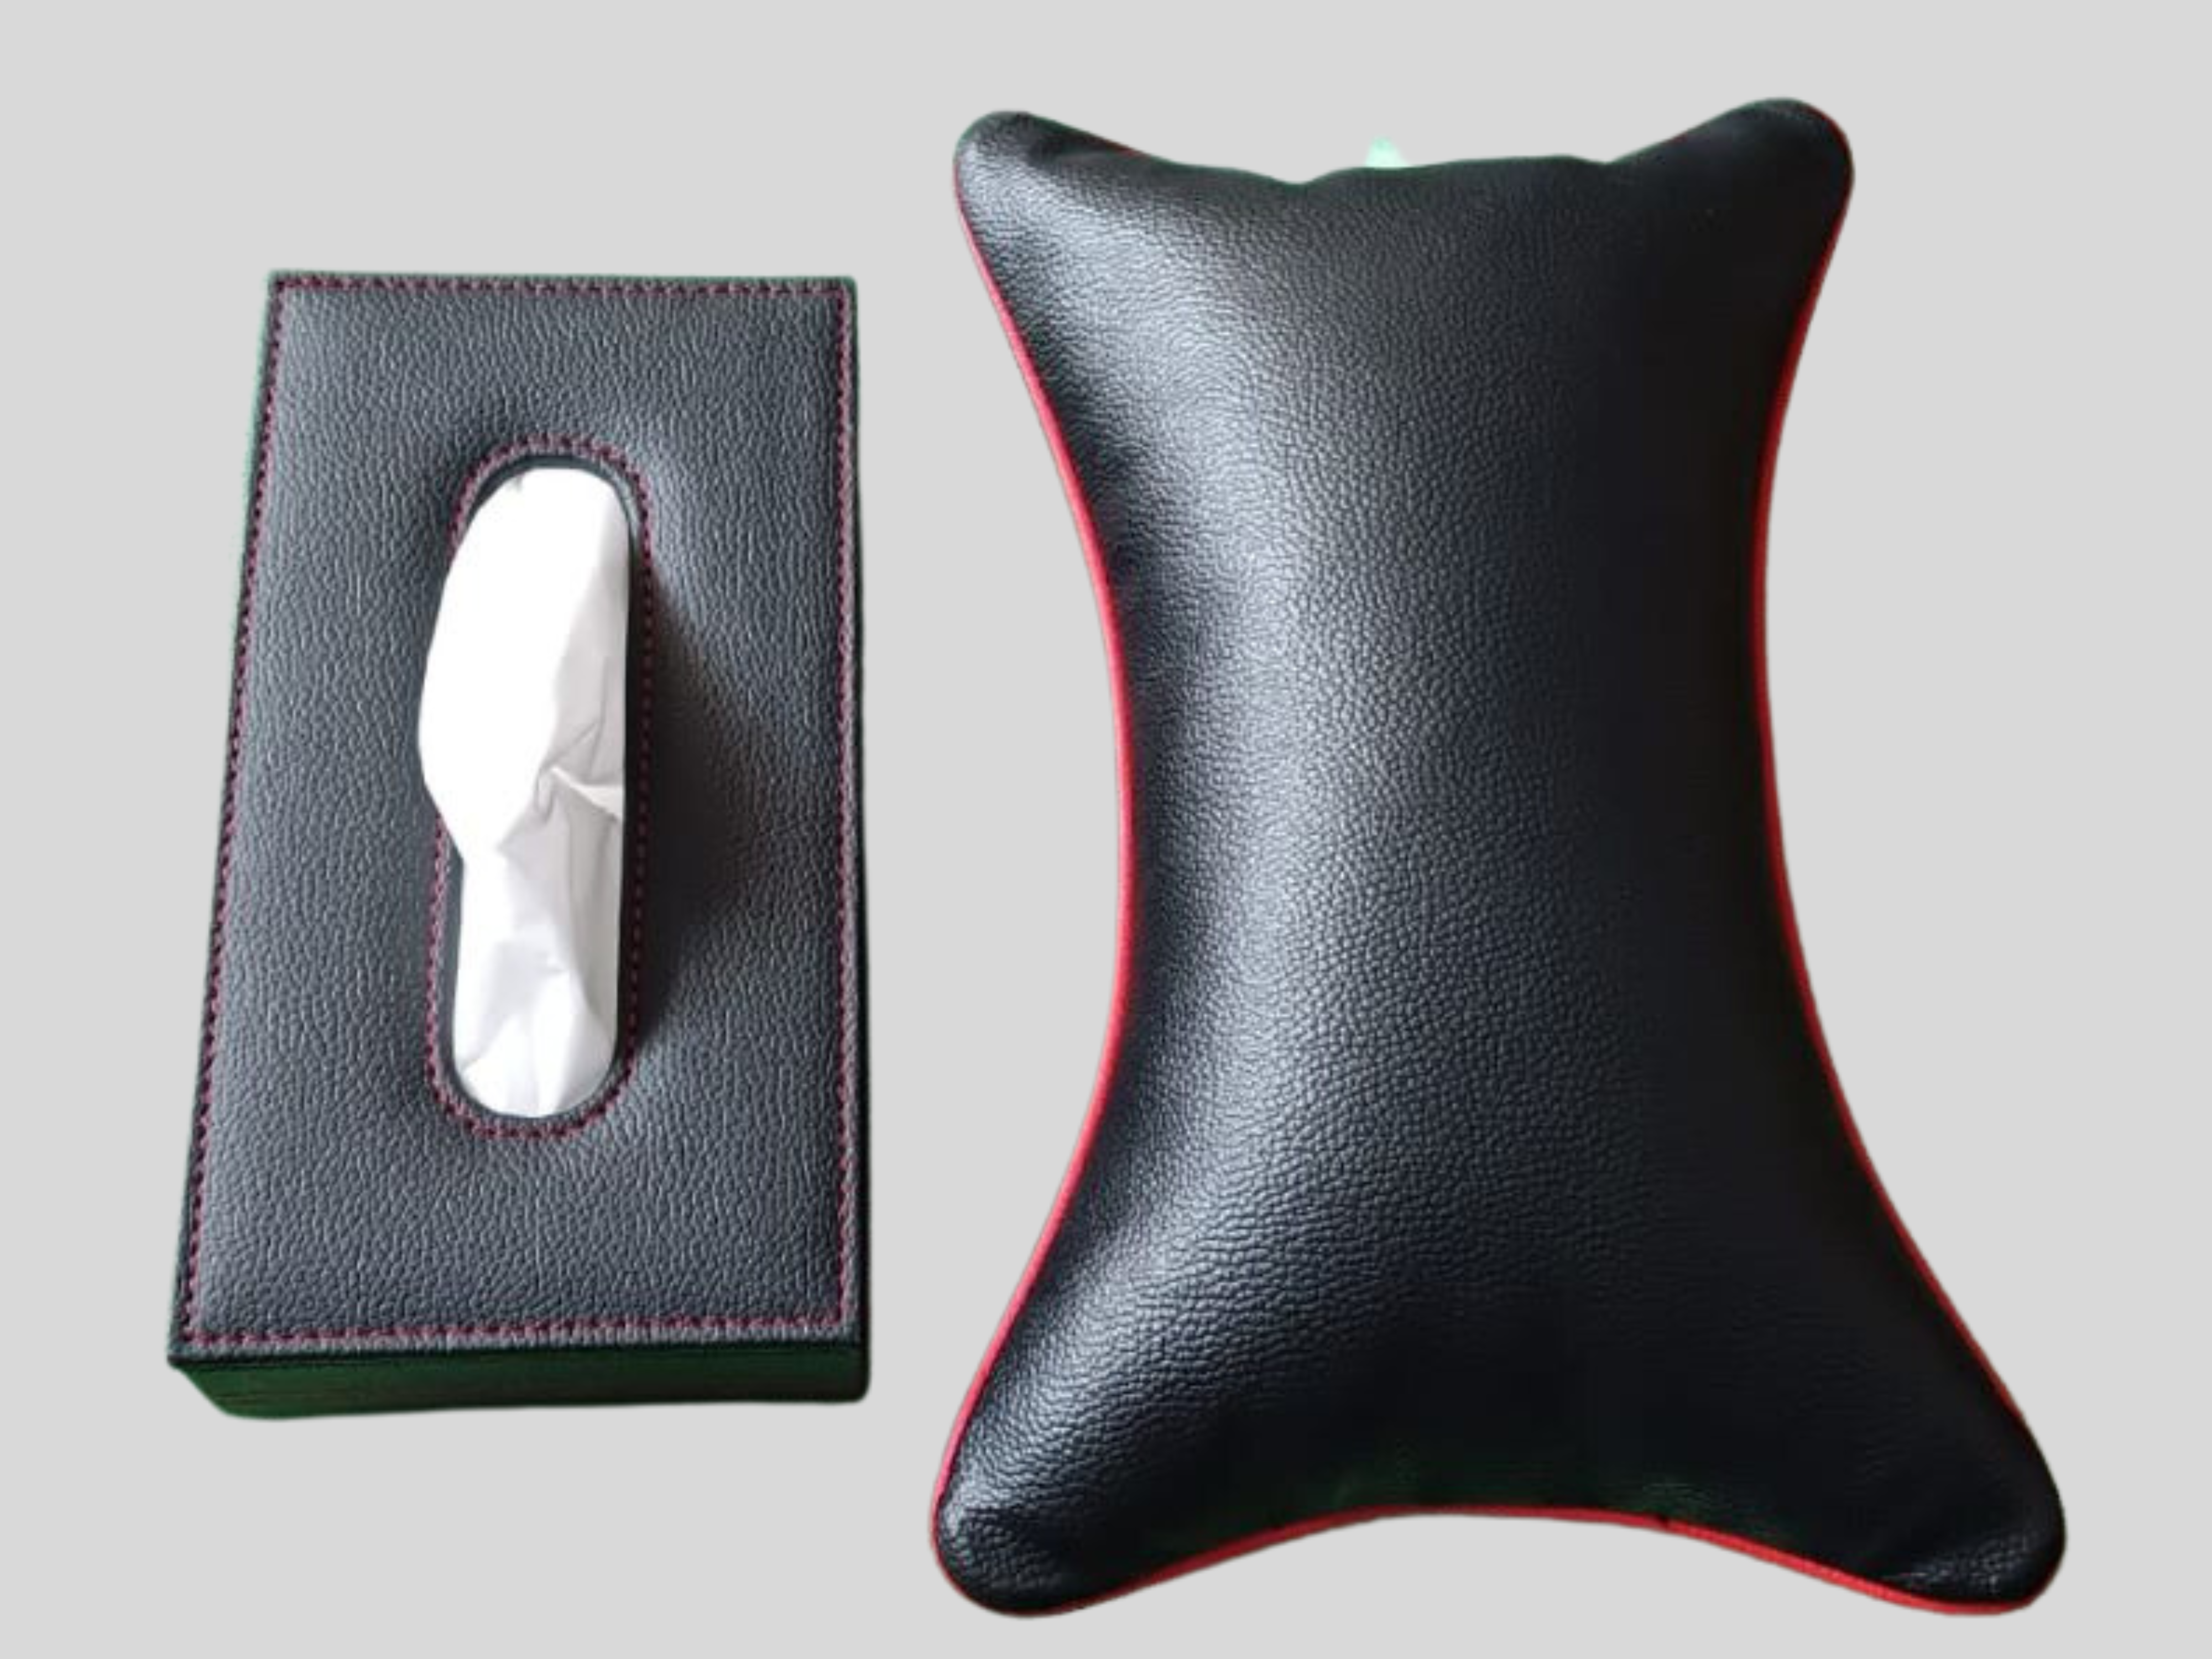 100% Organic Leather Handmade Leather Tissue Box